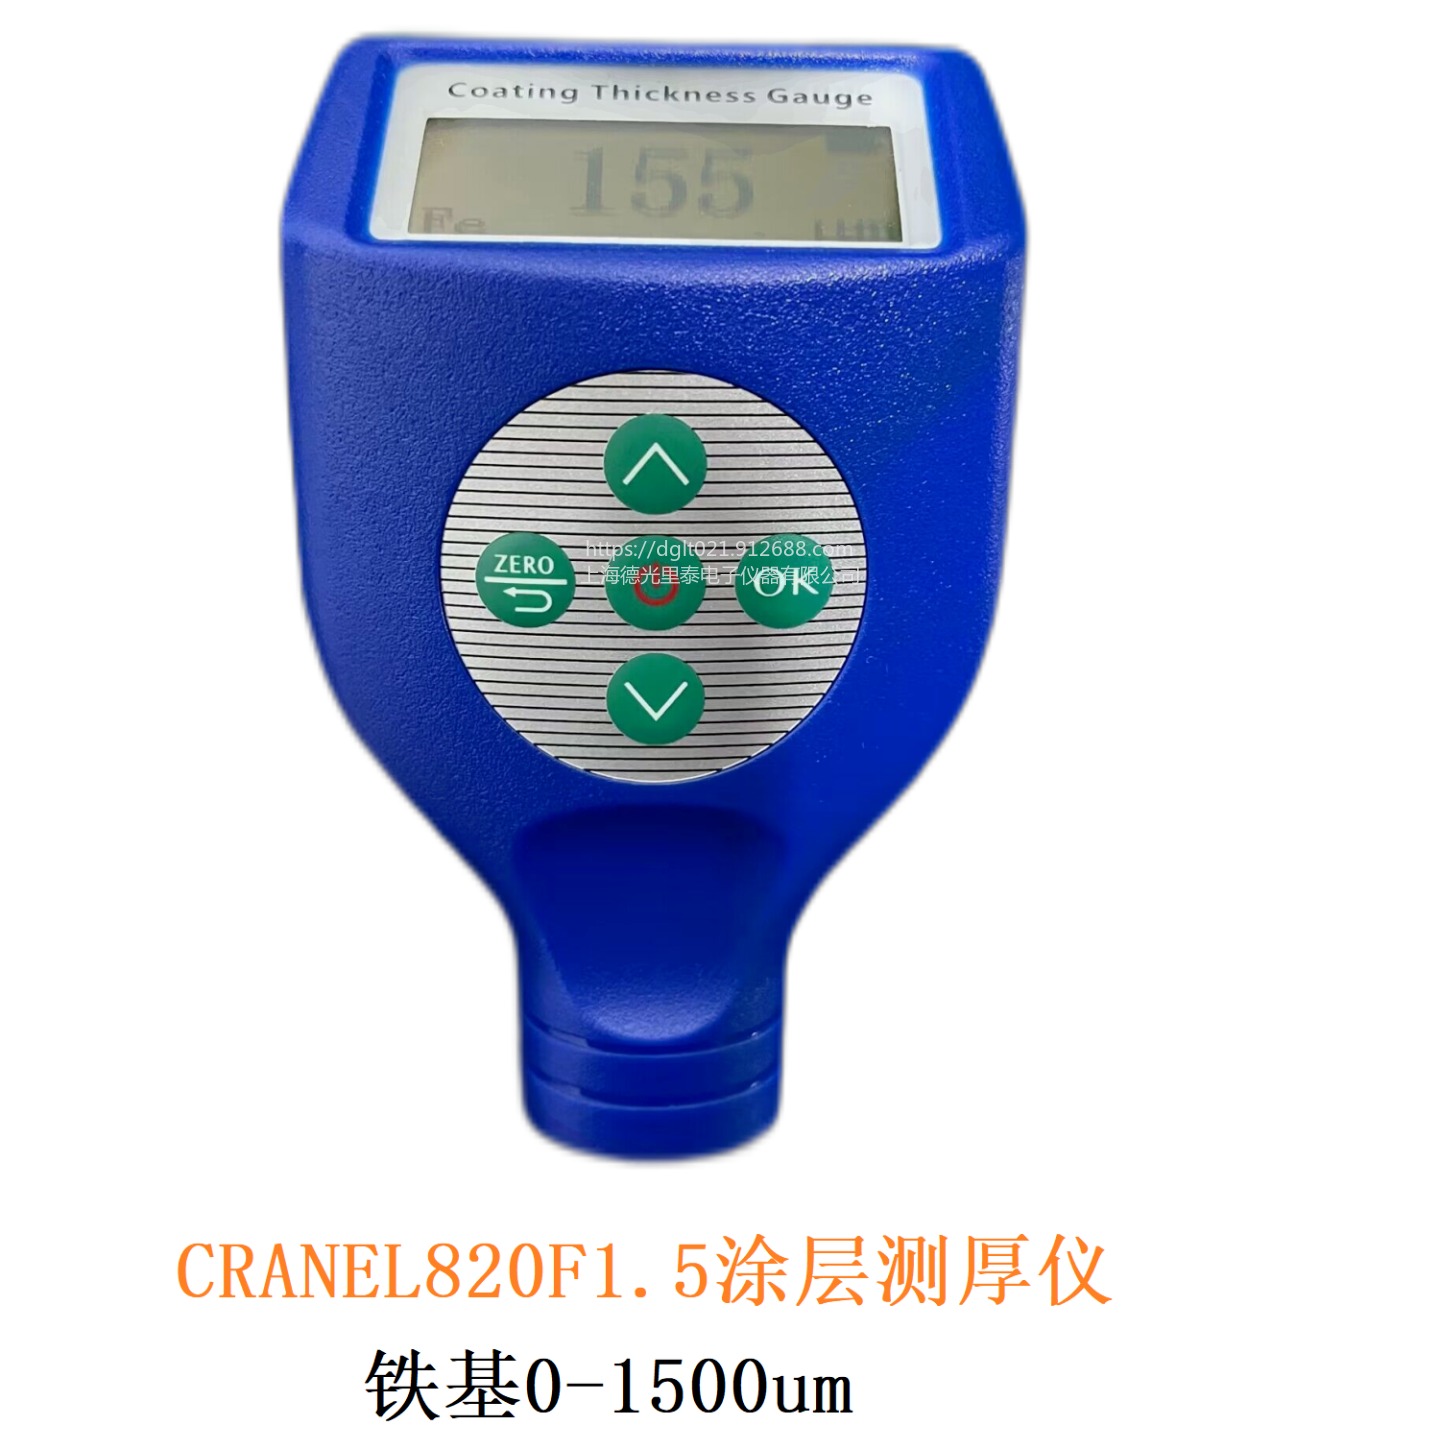 CRANEL820F1.5涂层测厚仪 铁基一体式 0-1500um